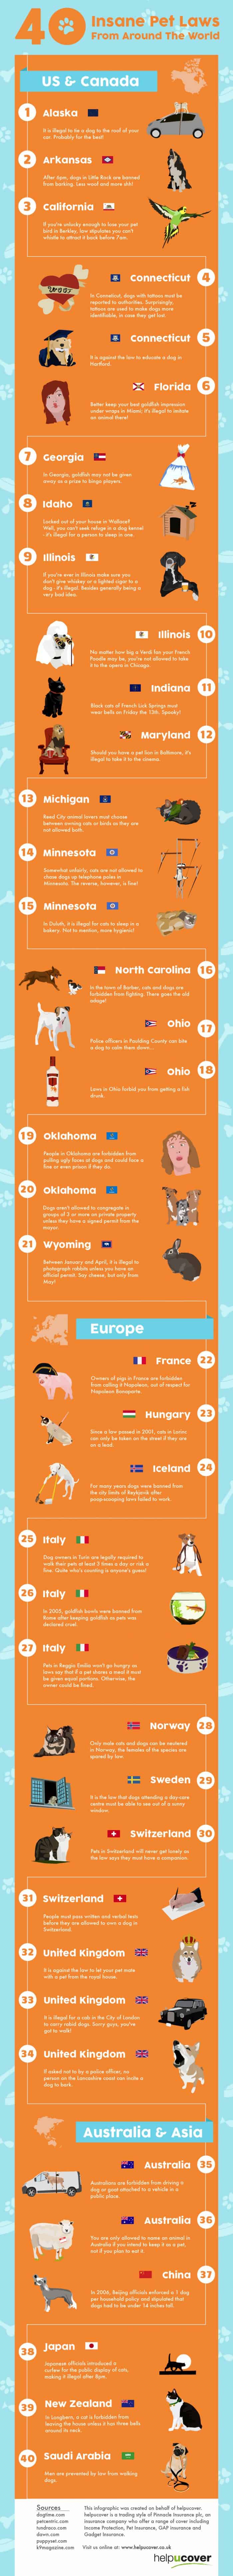 Weird pet laws around the world infographic